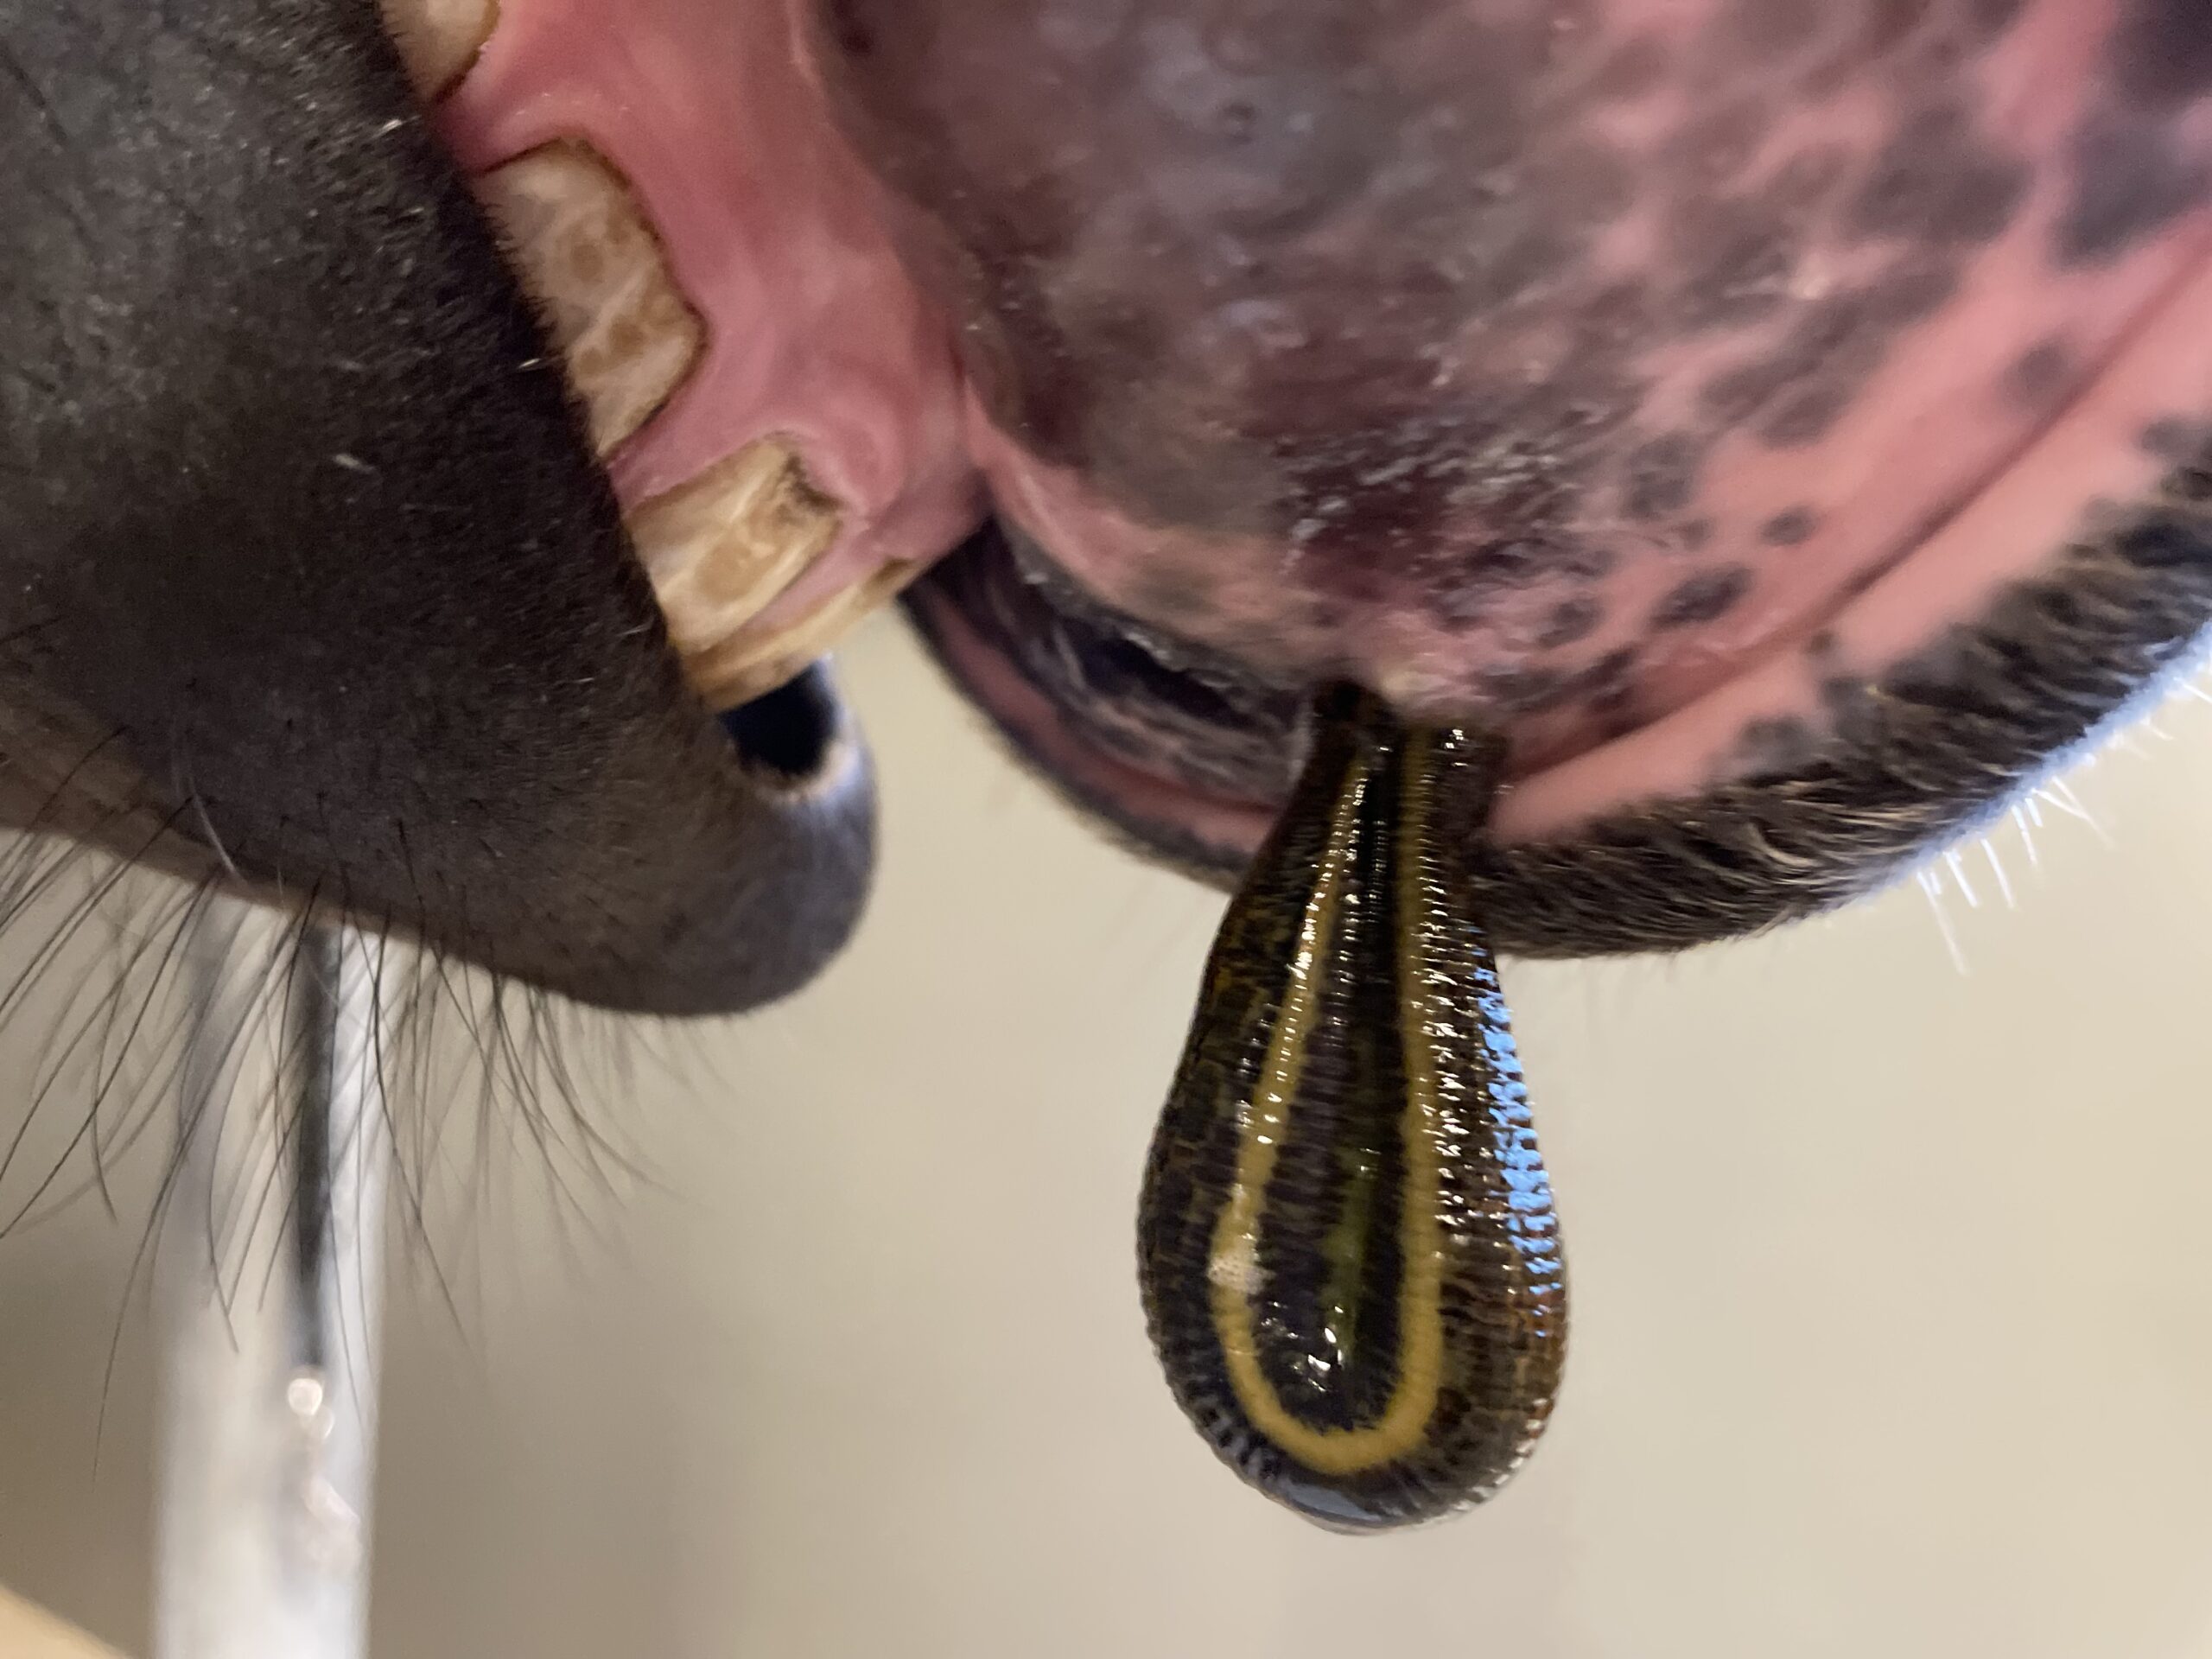 hirudotherapy horse leeches